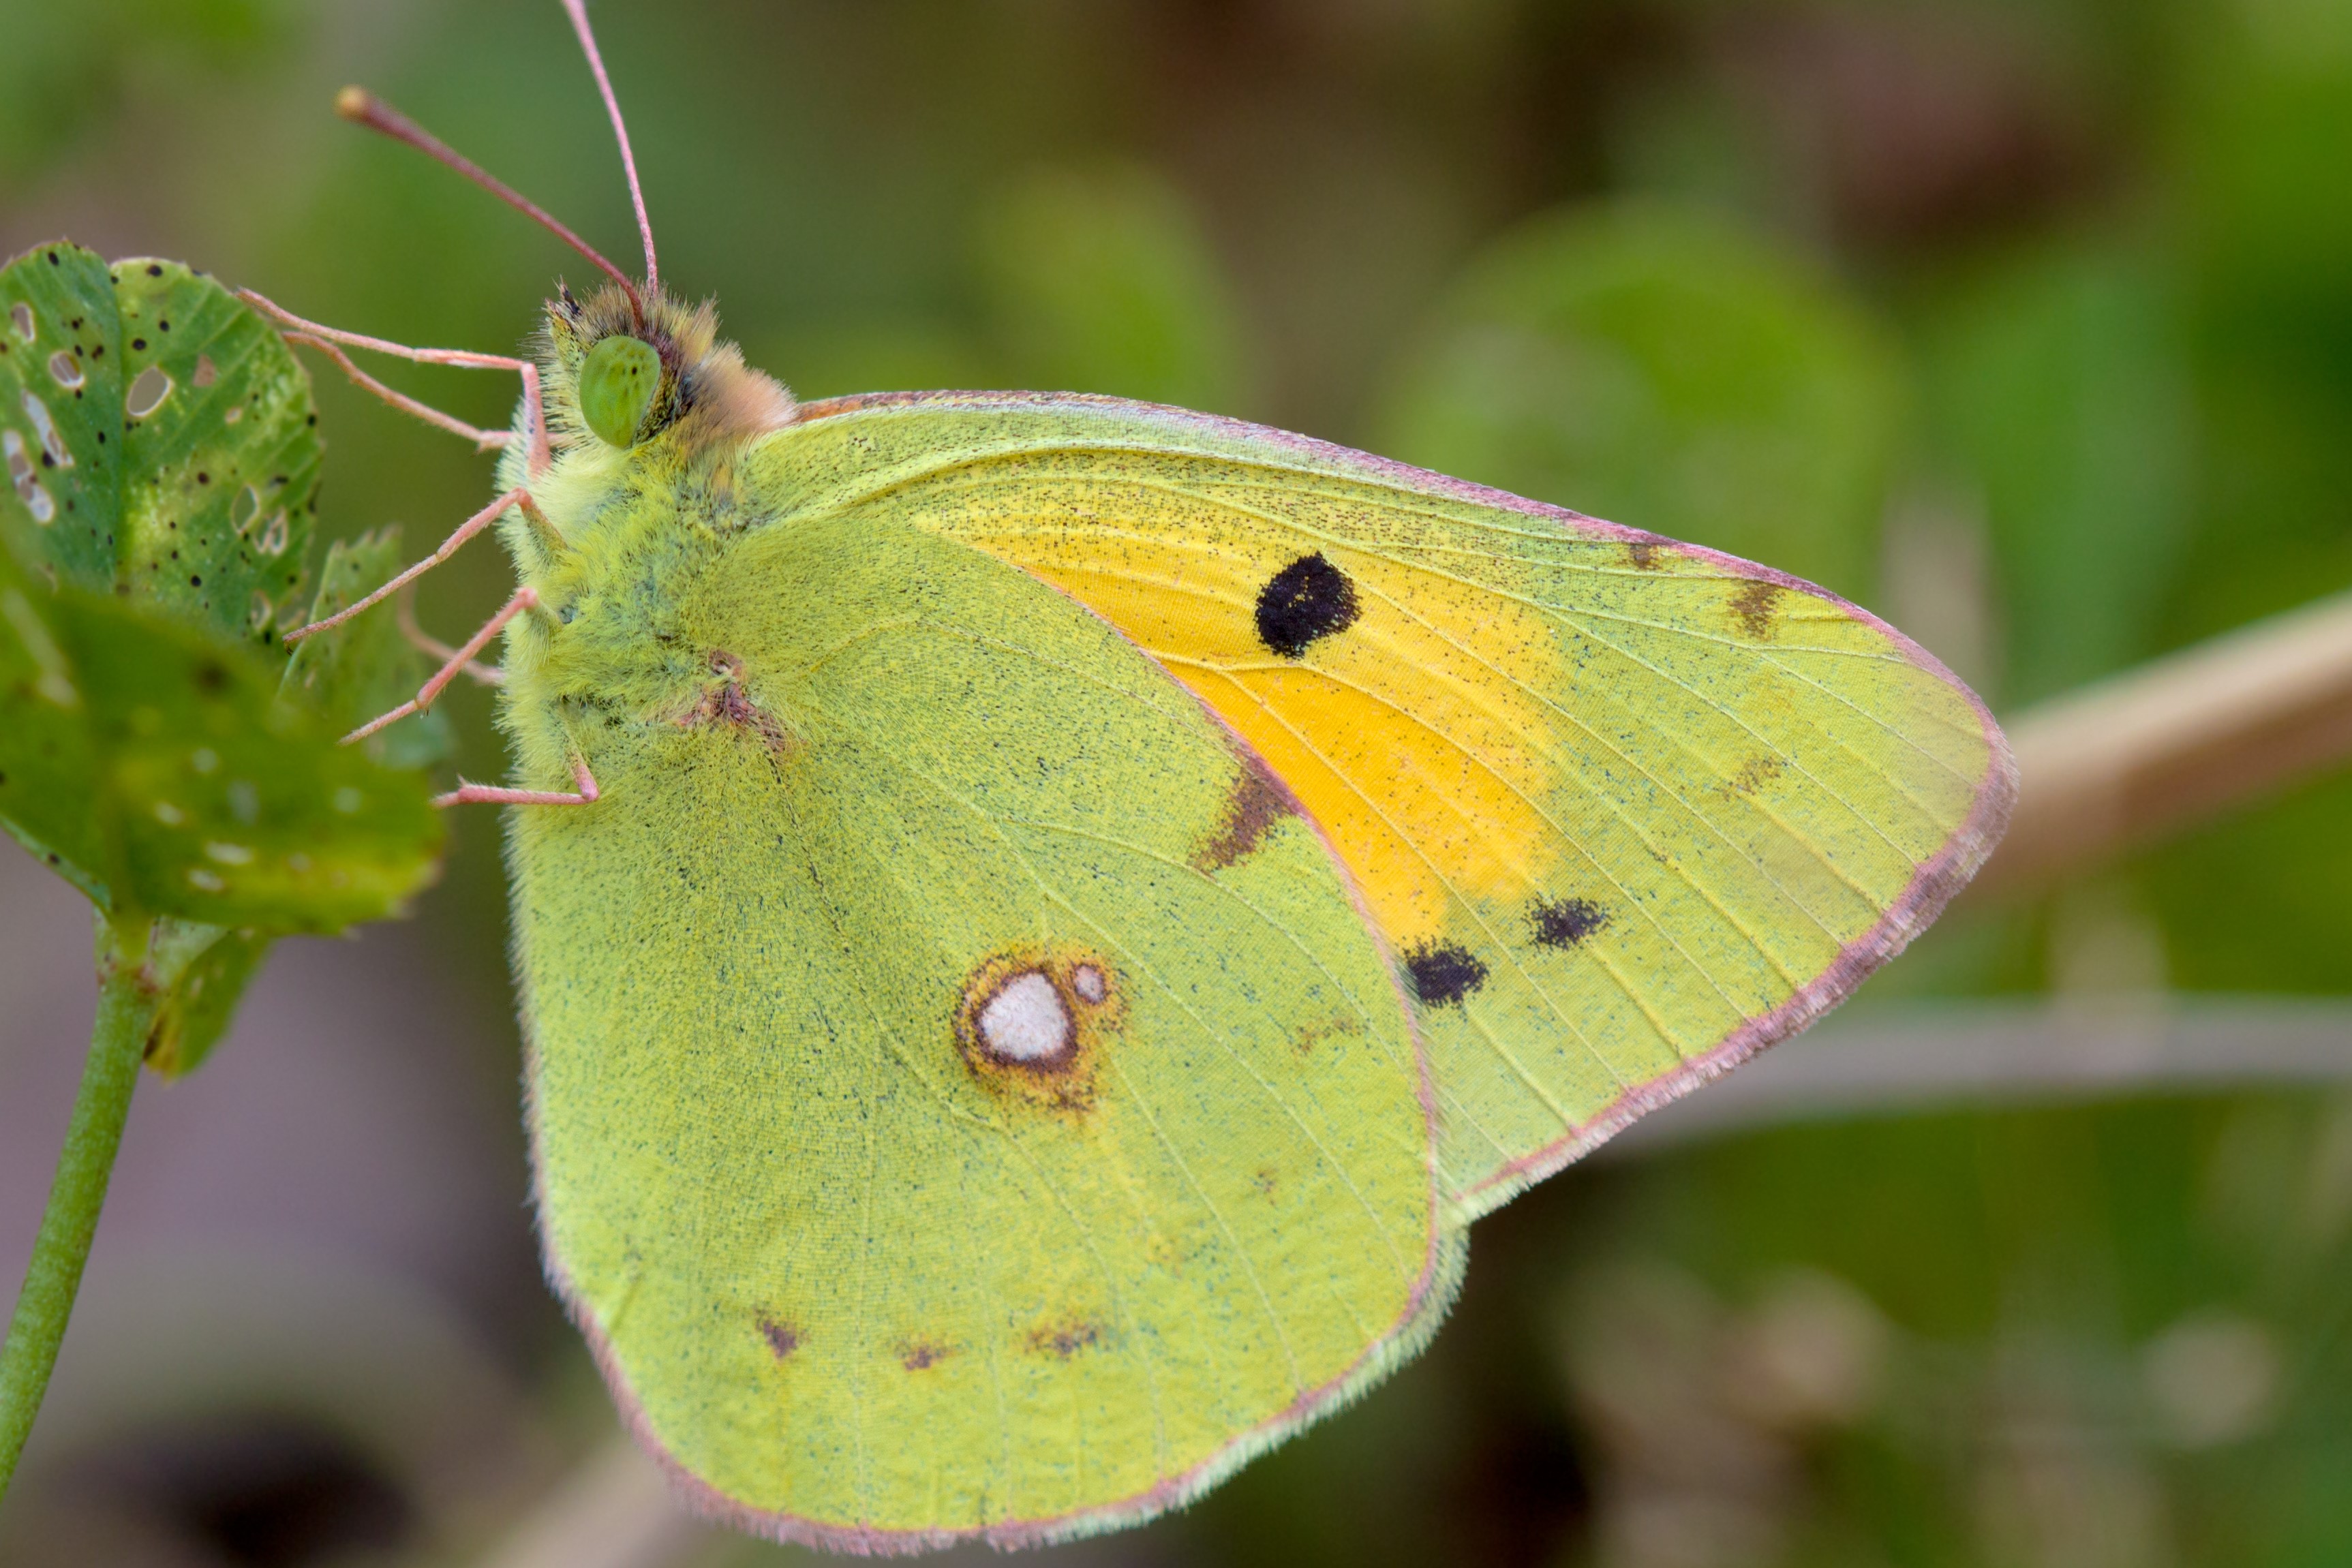 How to identify butterflies - Biodiversity Ireland